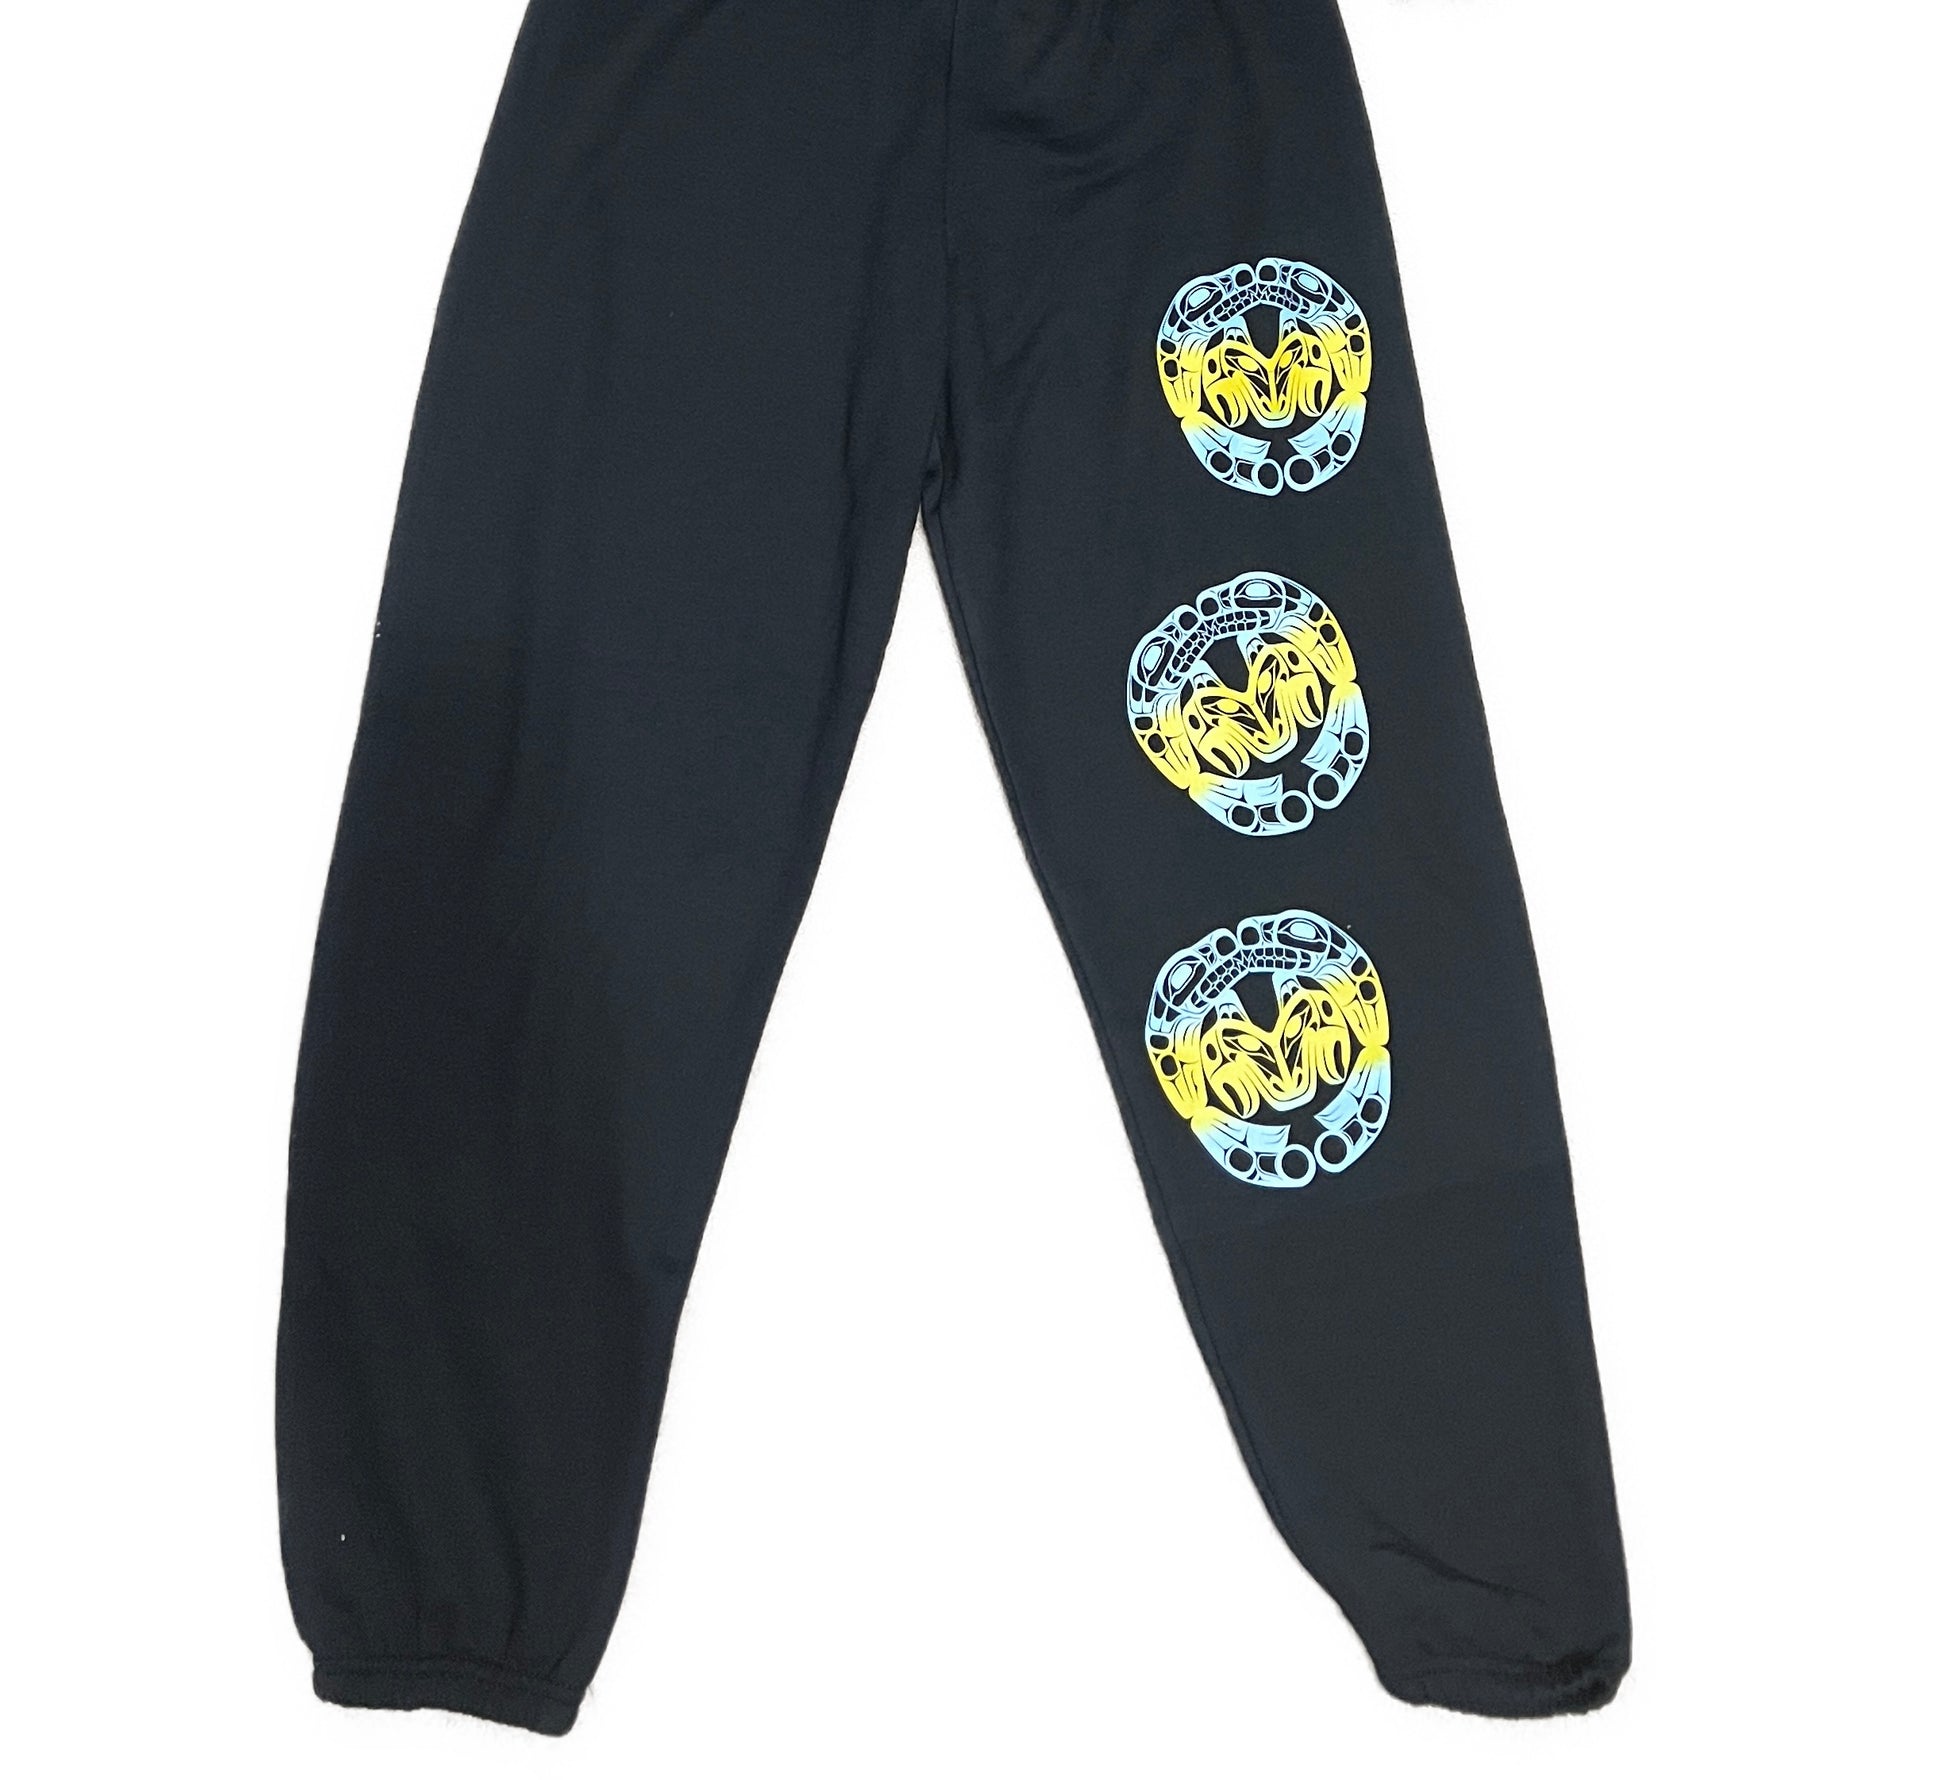 Jogging Pants Wolf - Premium  from Northwest Coast Native Apparel/John P Wilson Haisla - Just $50! Shop now at Northwest Coast Native Apparel/John P Wilson Haisla